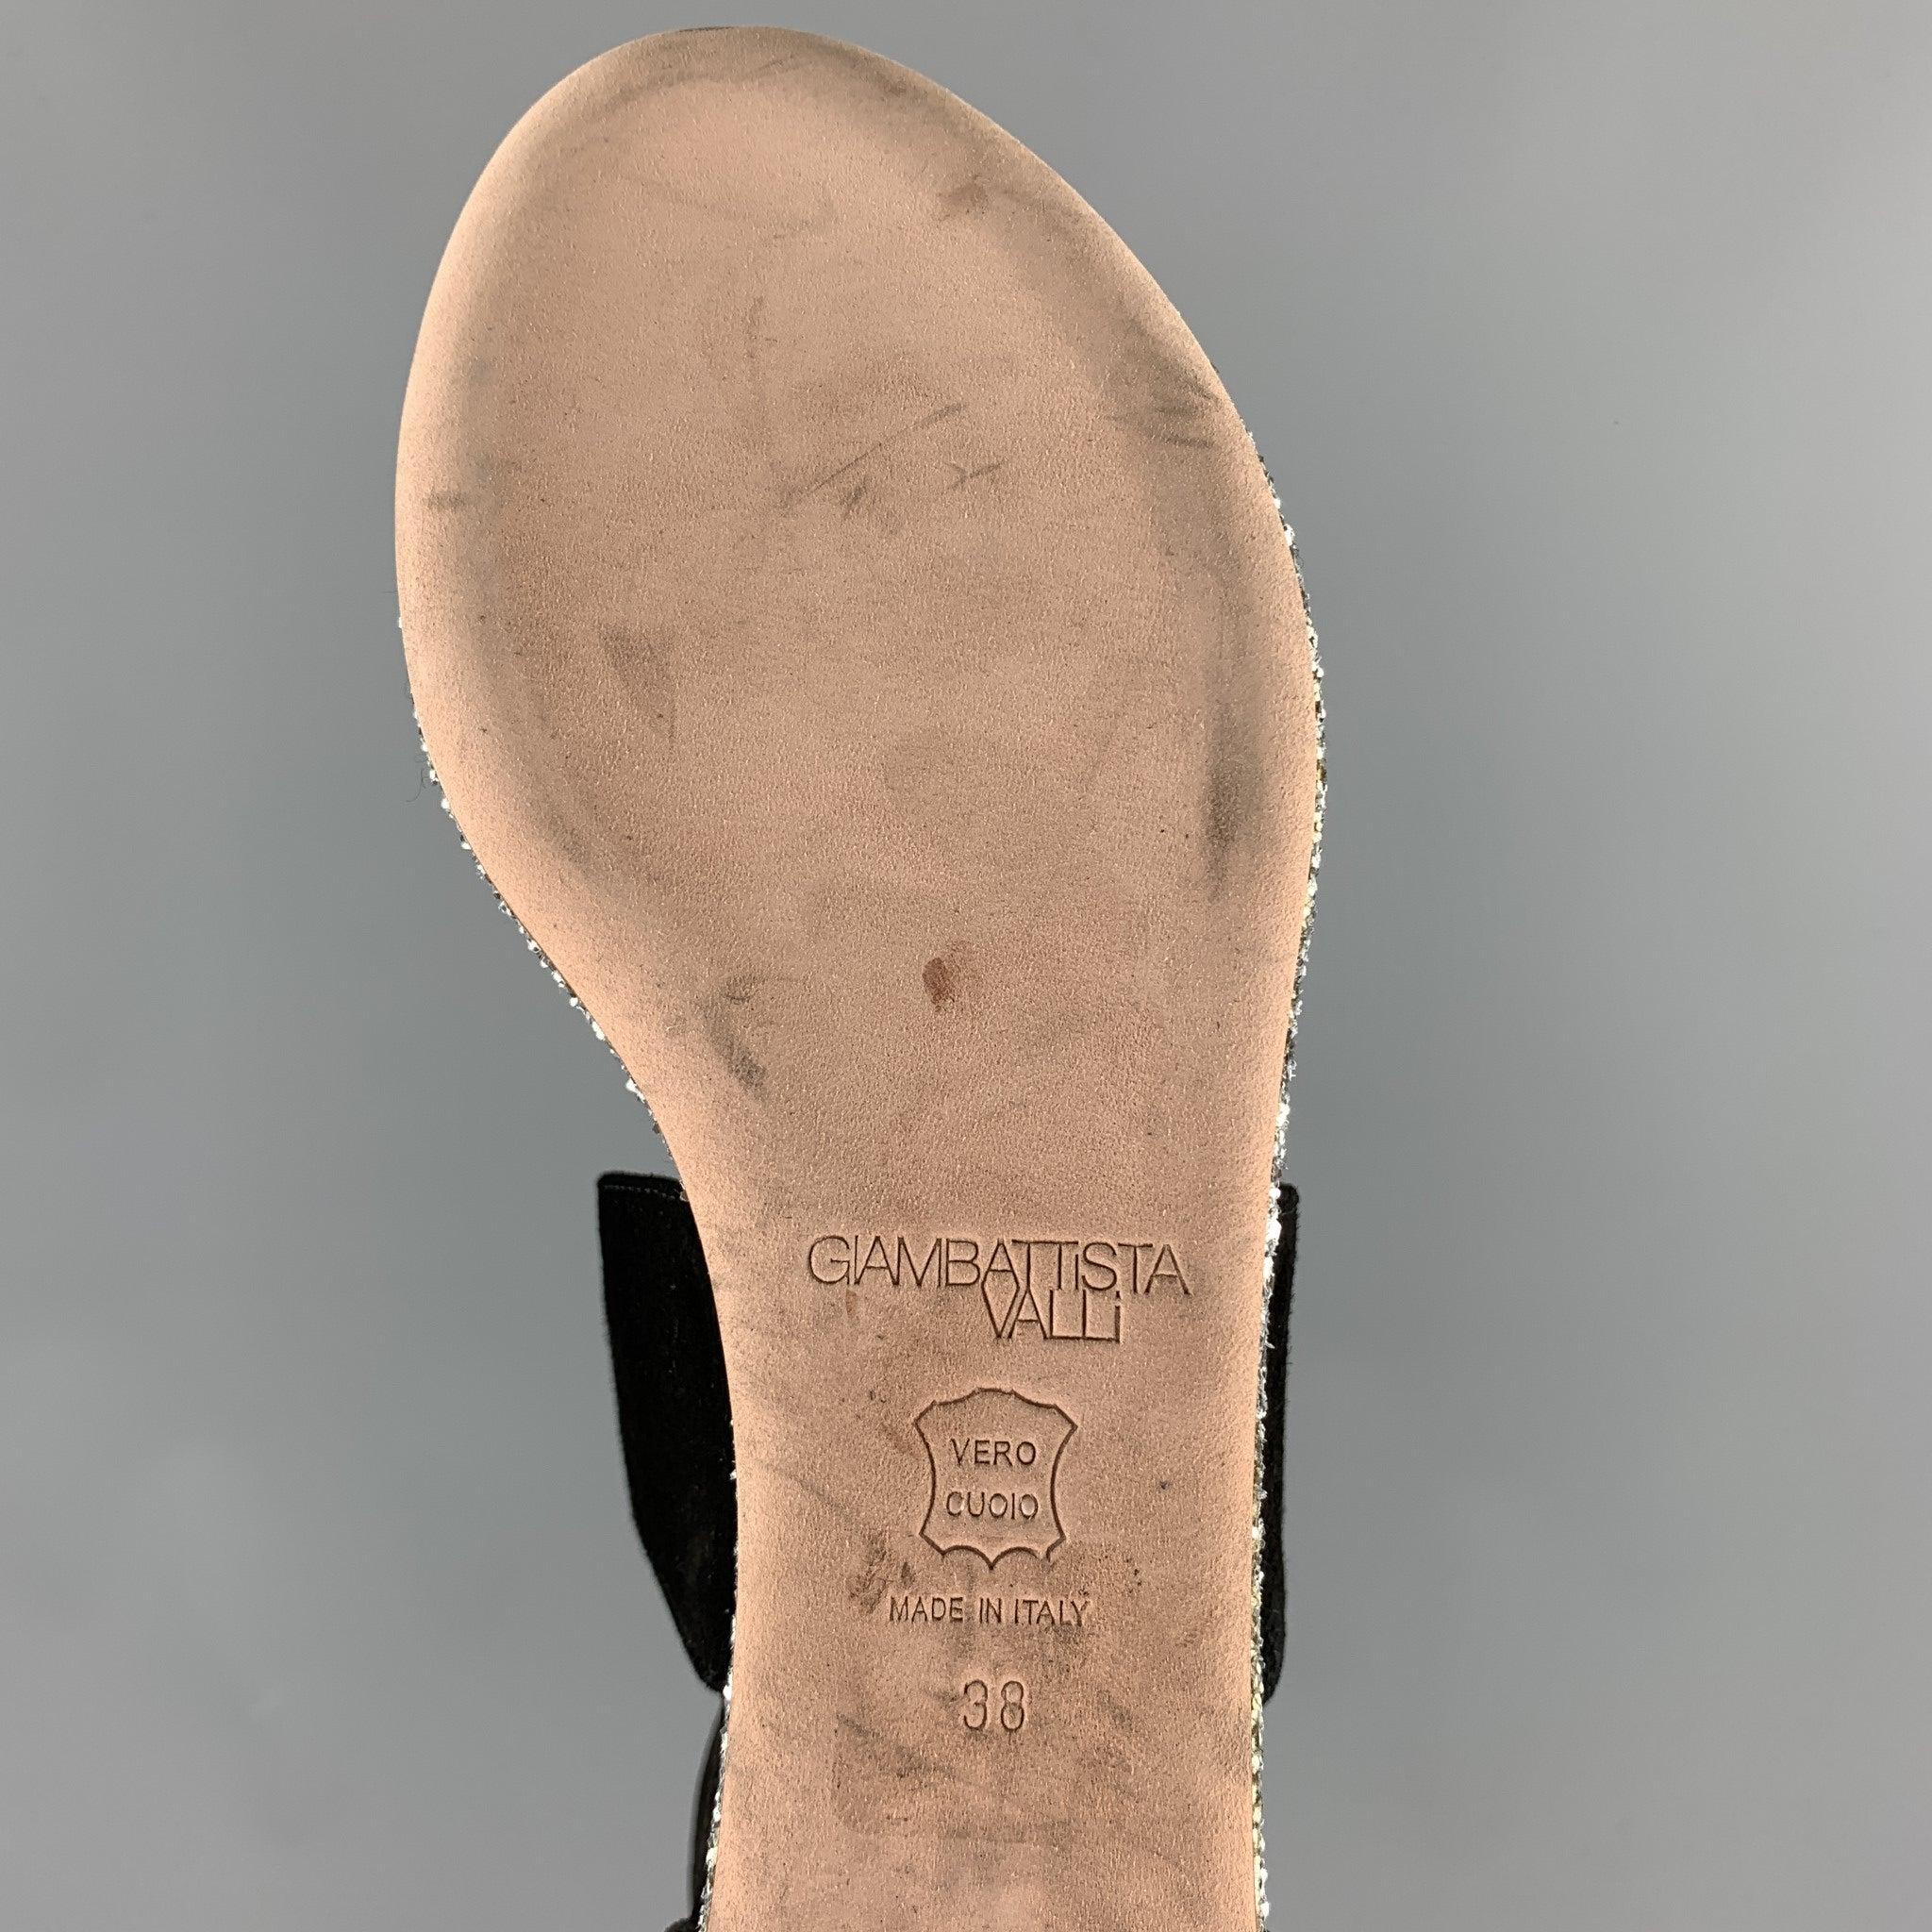 GIAMBATTISTA VALLI S/S 2016 Size 8 Black Suede Glitter Gladiator Sandals For Sale 4